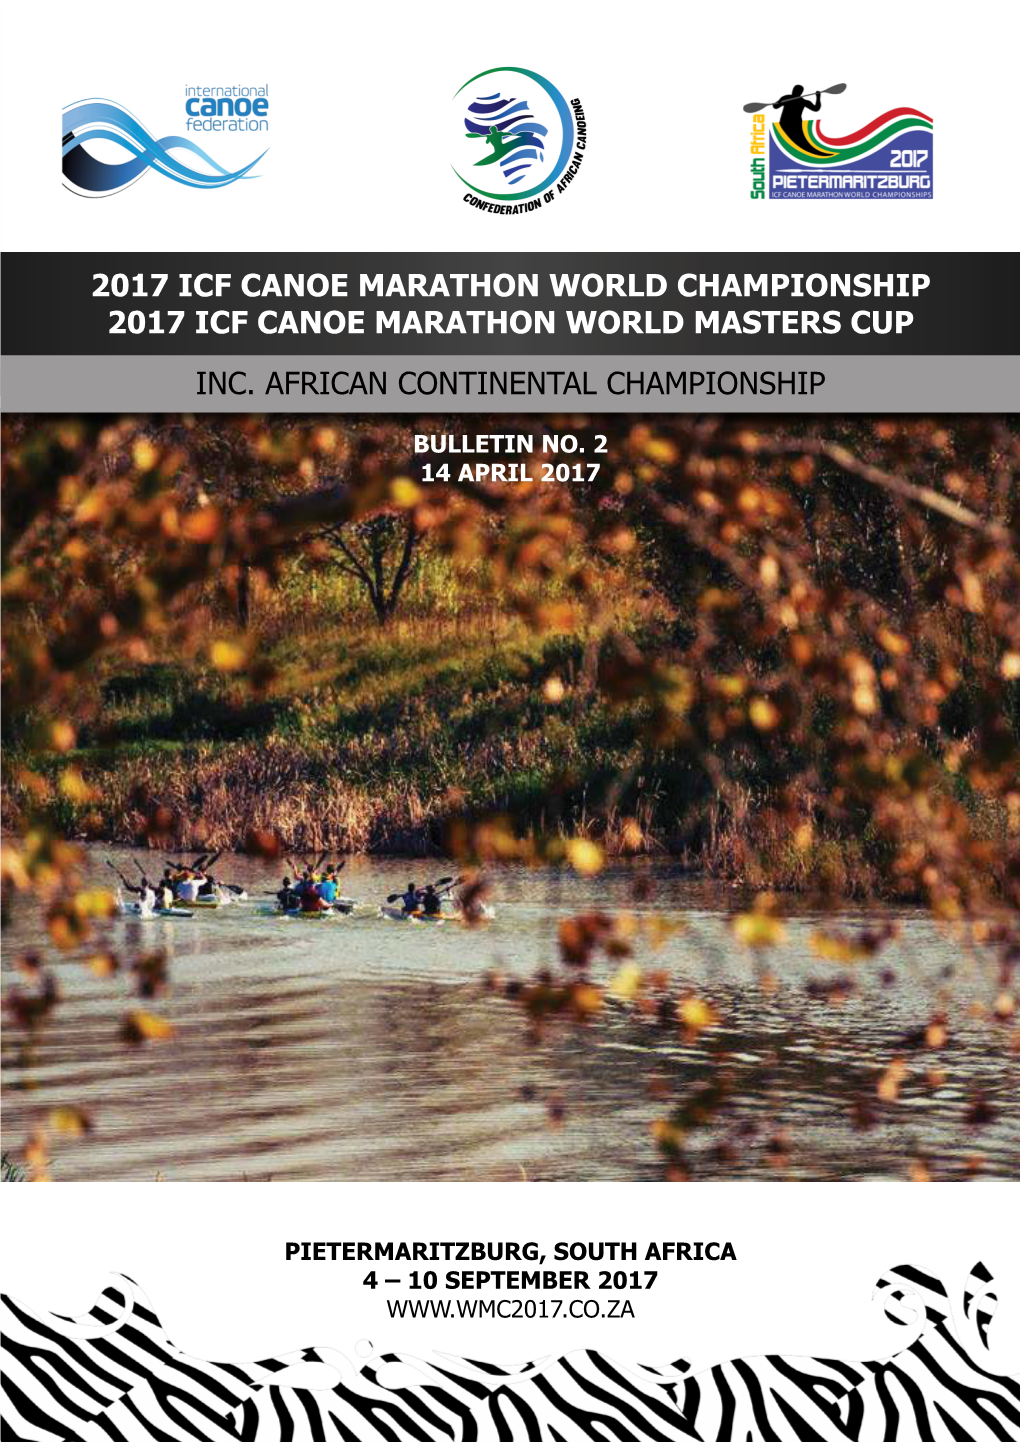 Systems GO for ICF Canoe Marathon World Championships